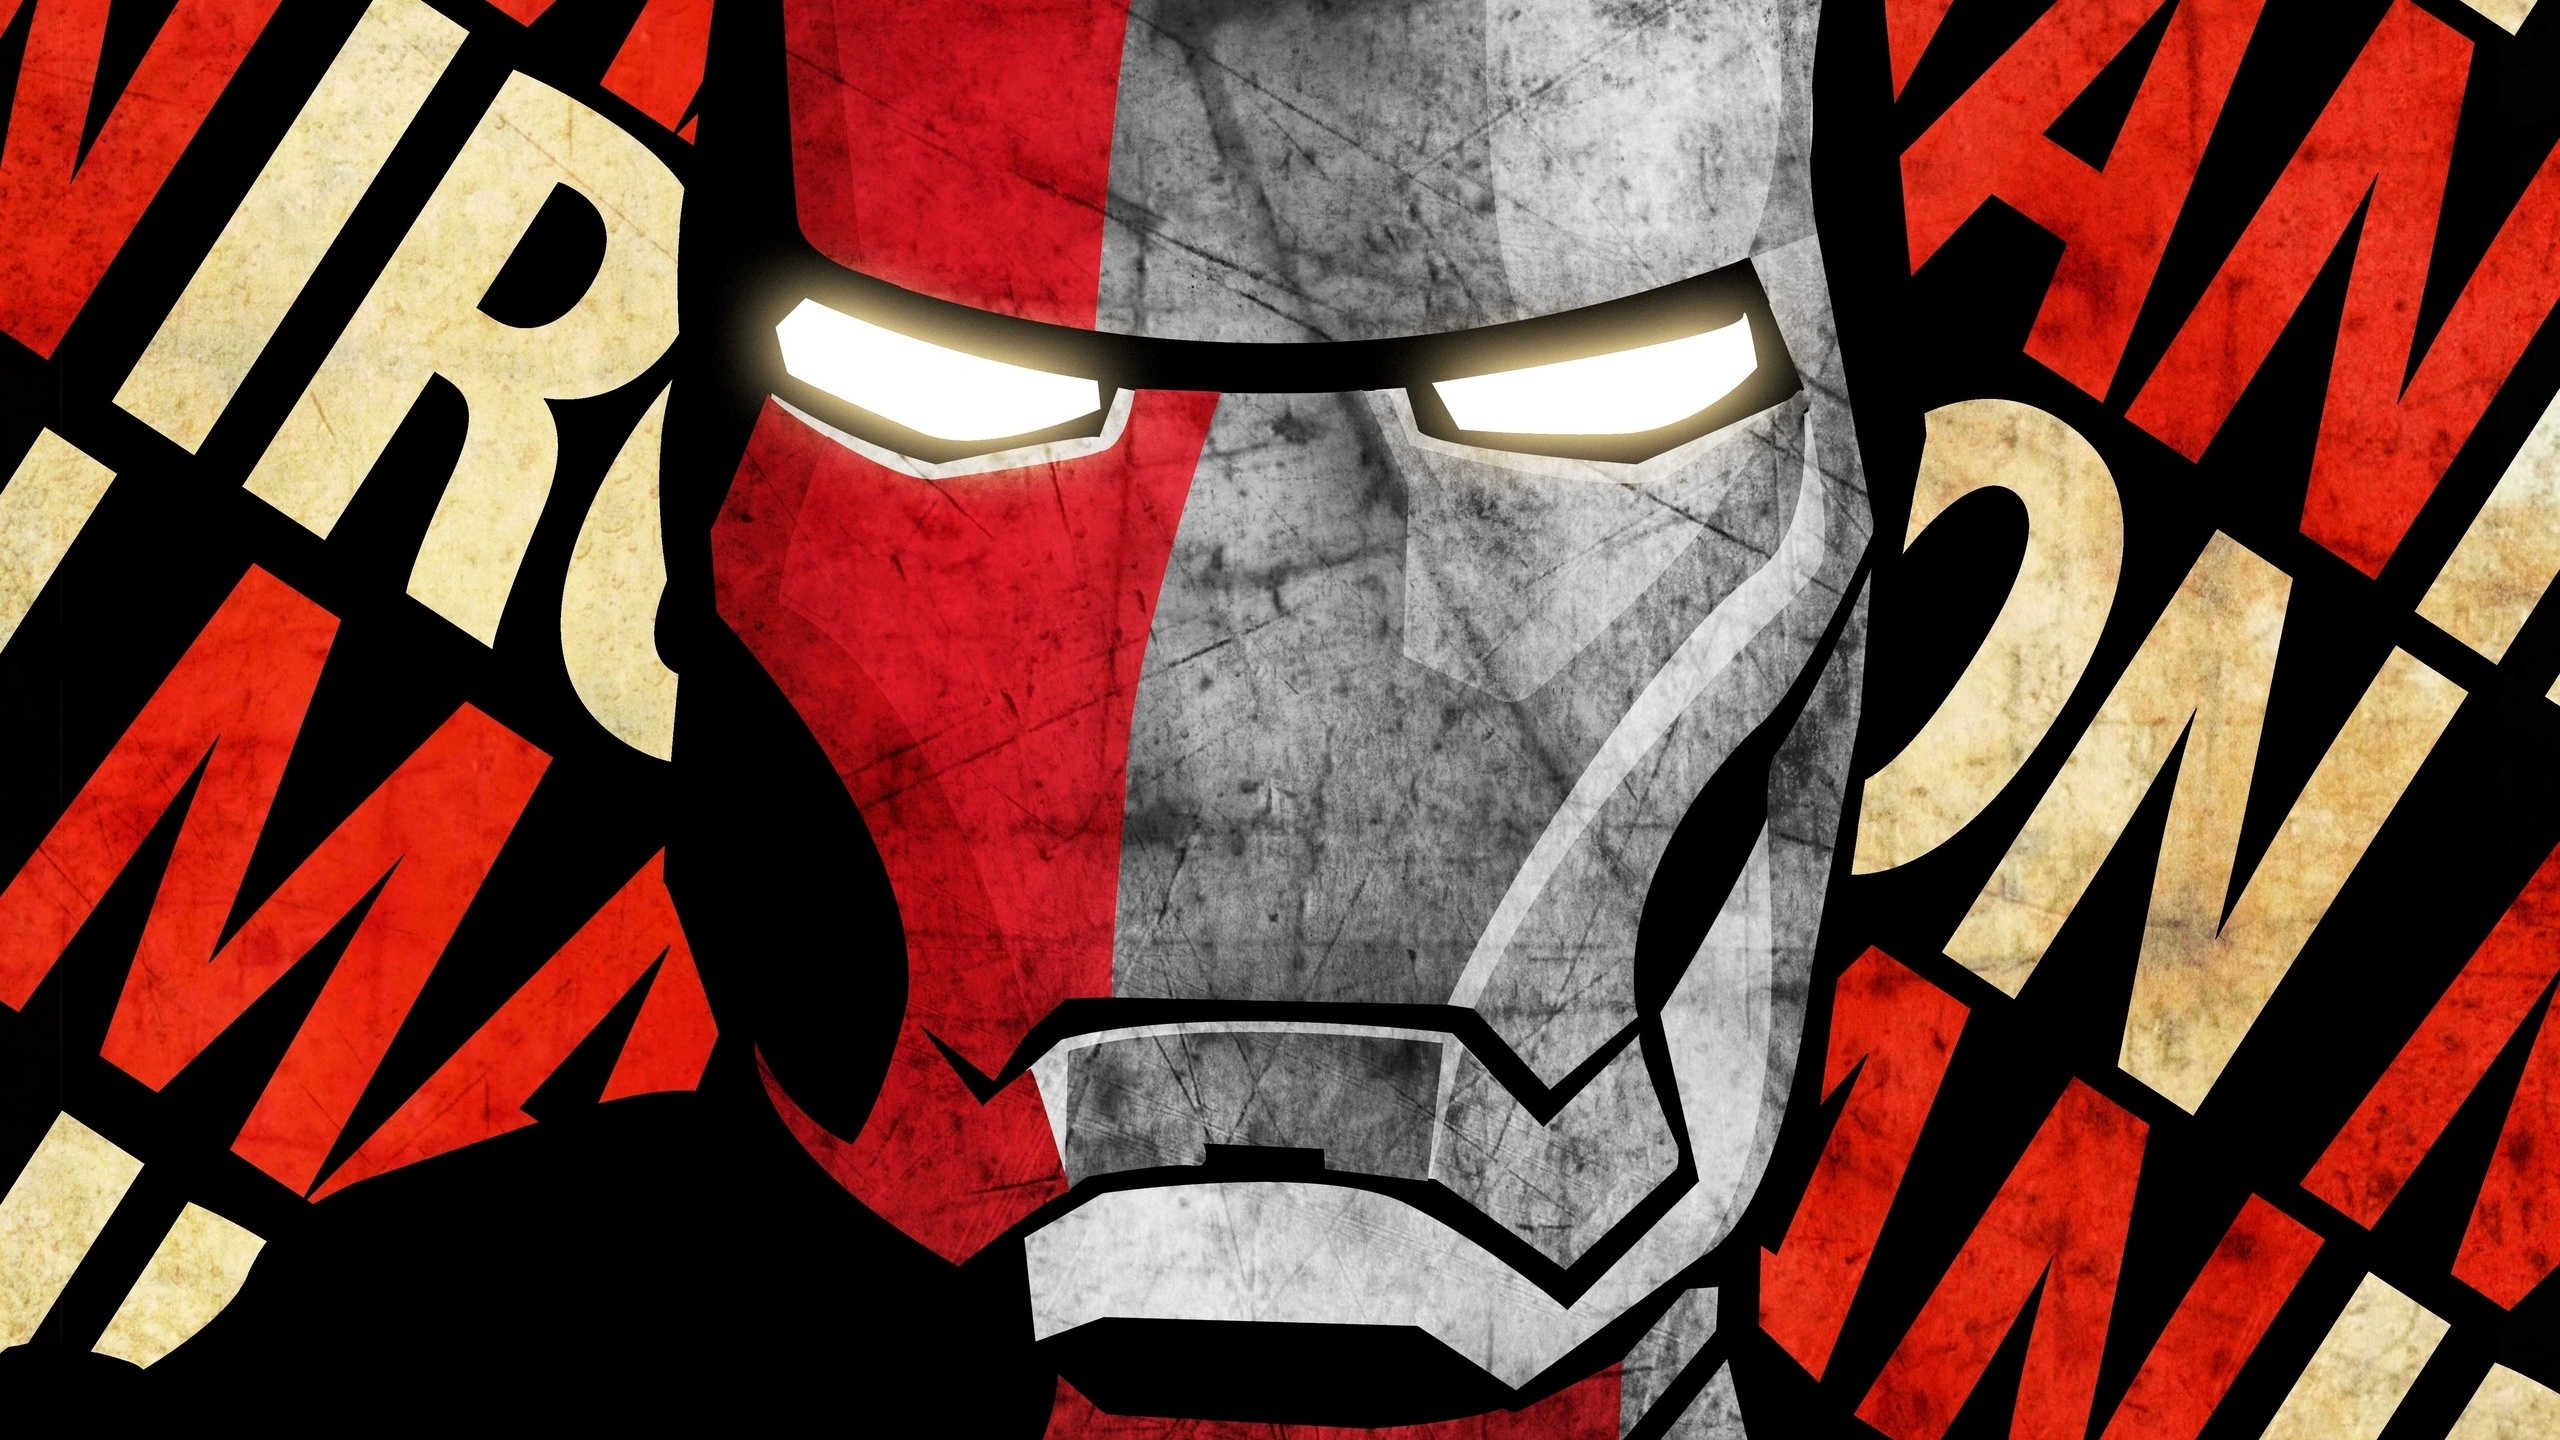 Iron Man Mask for 2560x1440 HDTV resolution